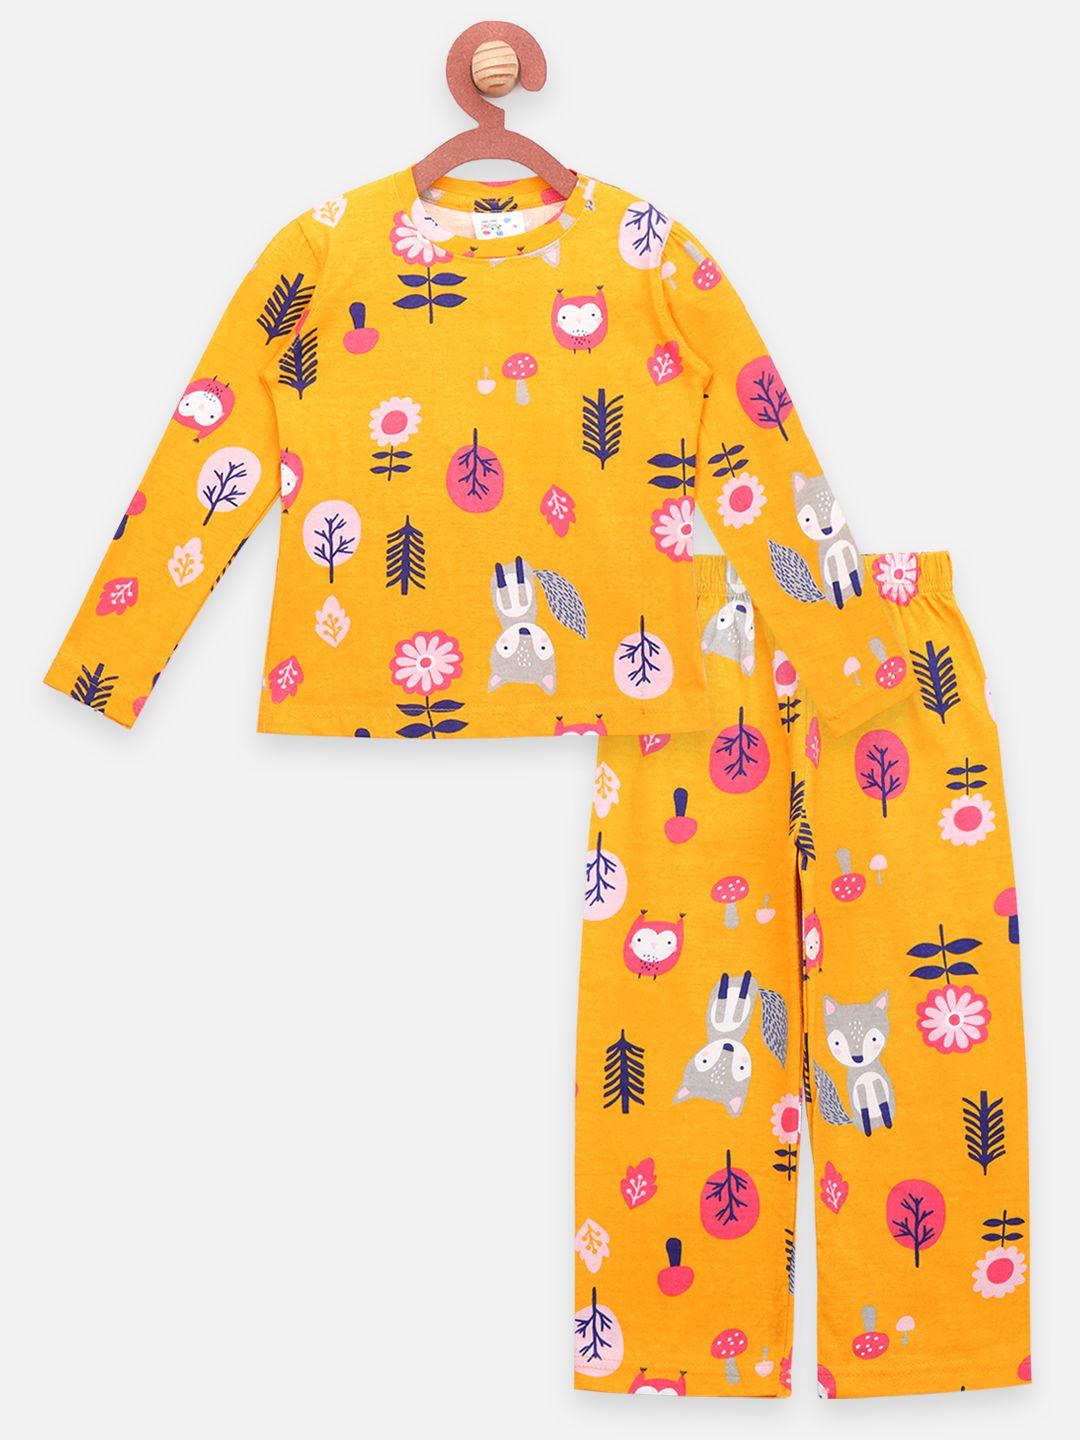 lilpicks boys yellow & pink printed night suit